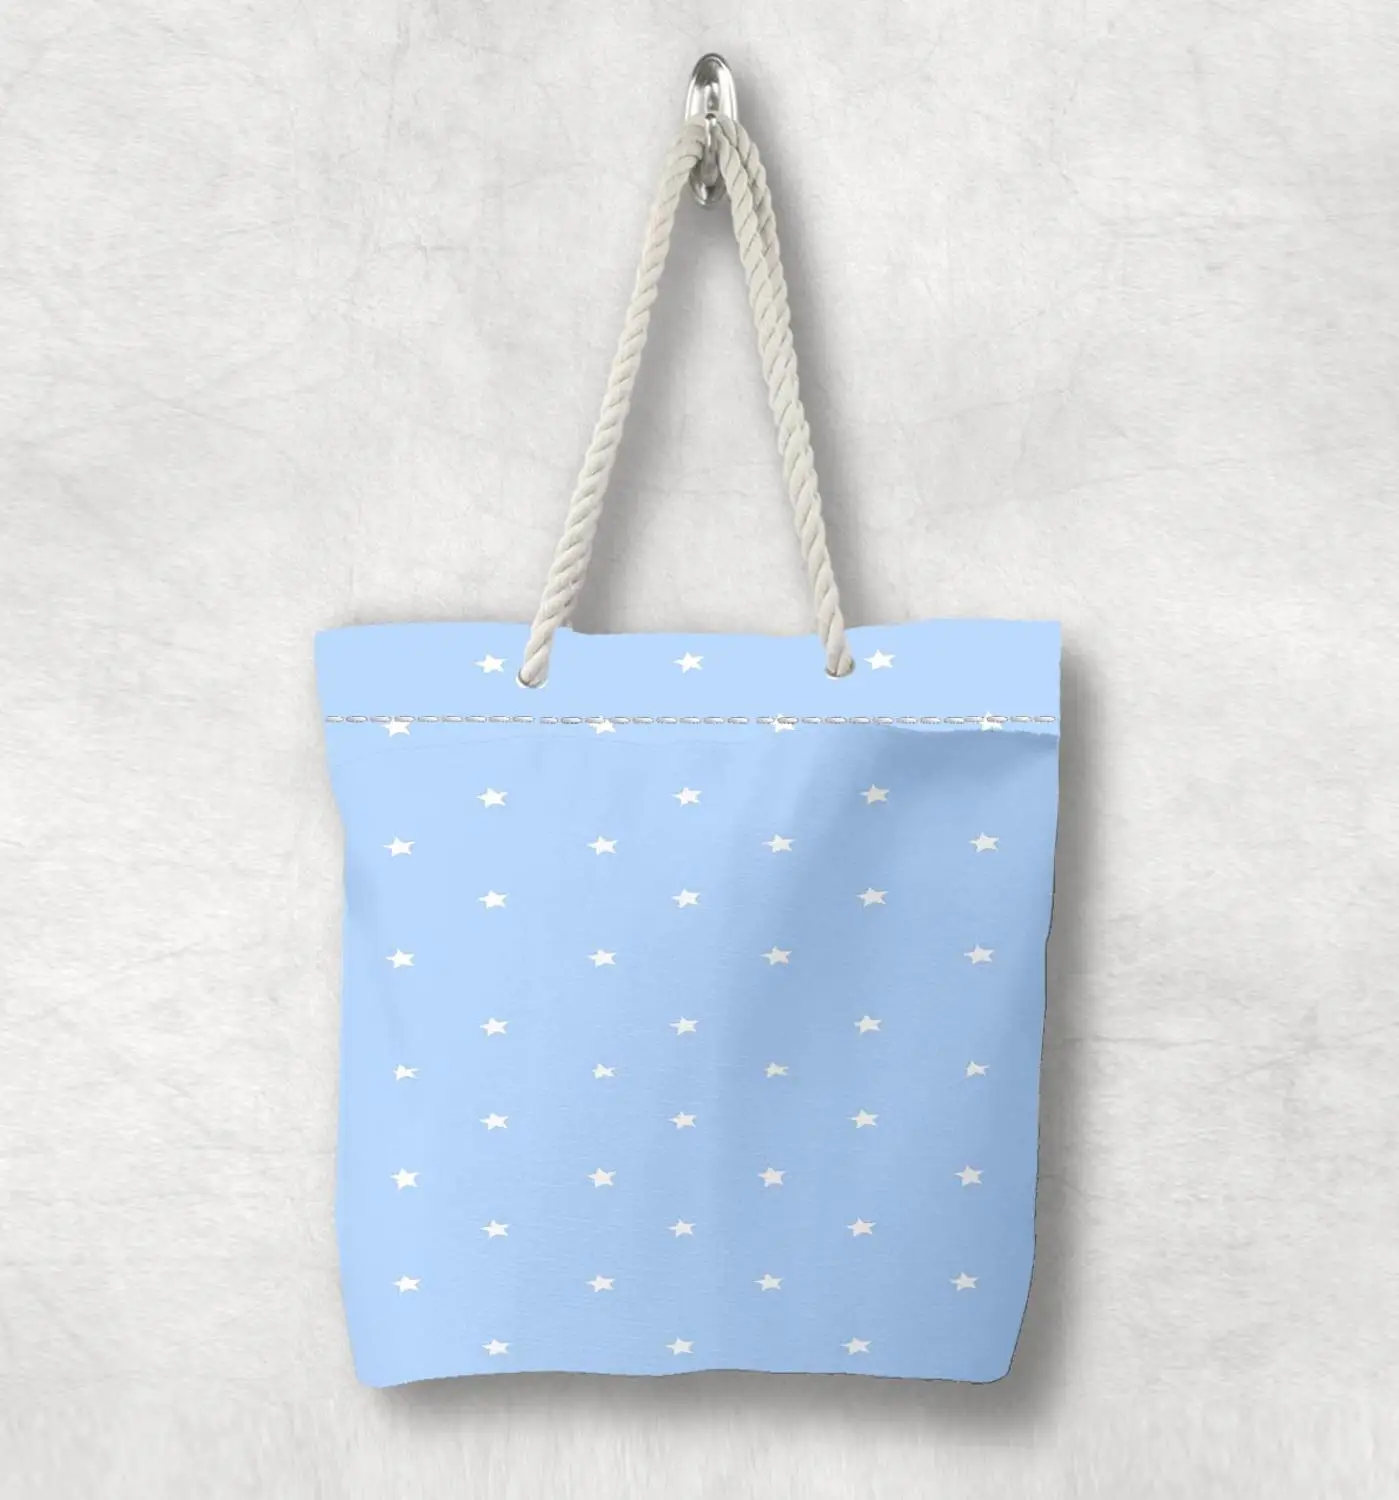 

Else Blue White Stars Hugs Pink Hearts Scandinavian White Rope Handle Canvas Bag Cartoon Print Zippered Tote Bag Shoulder Bag